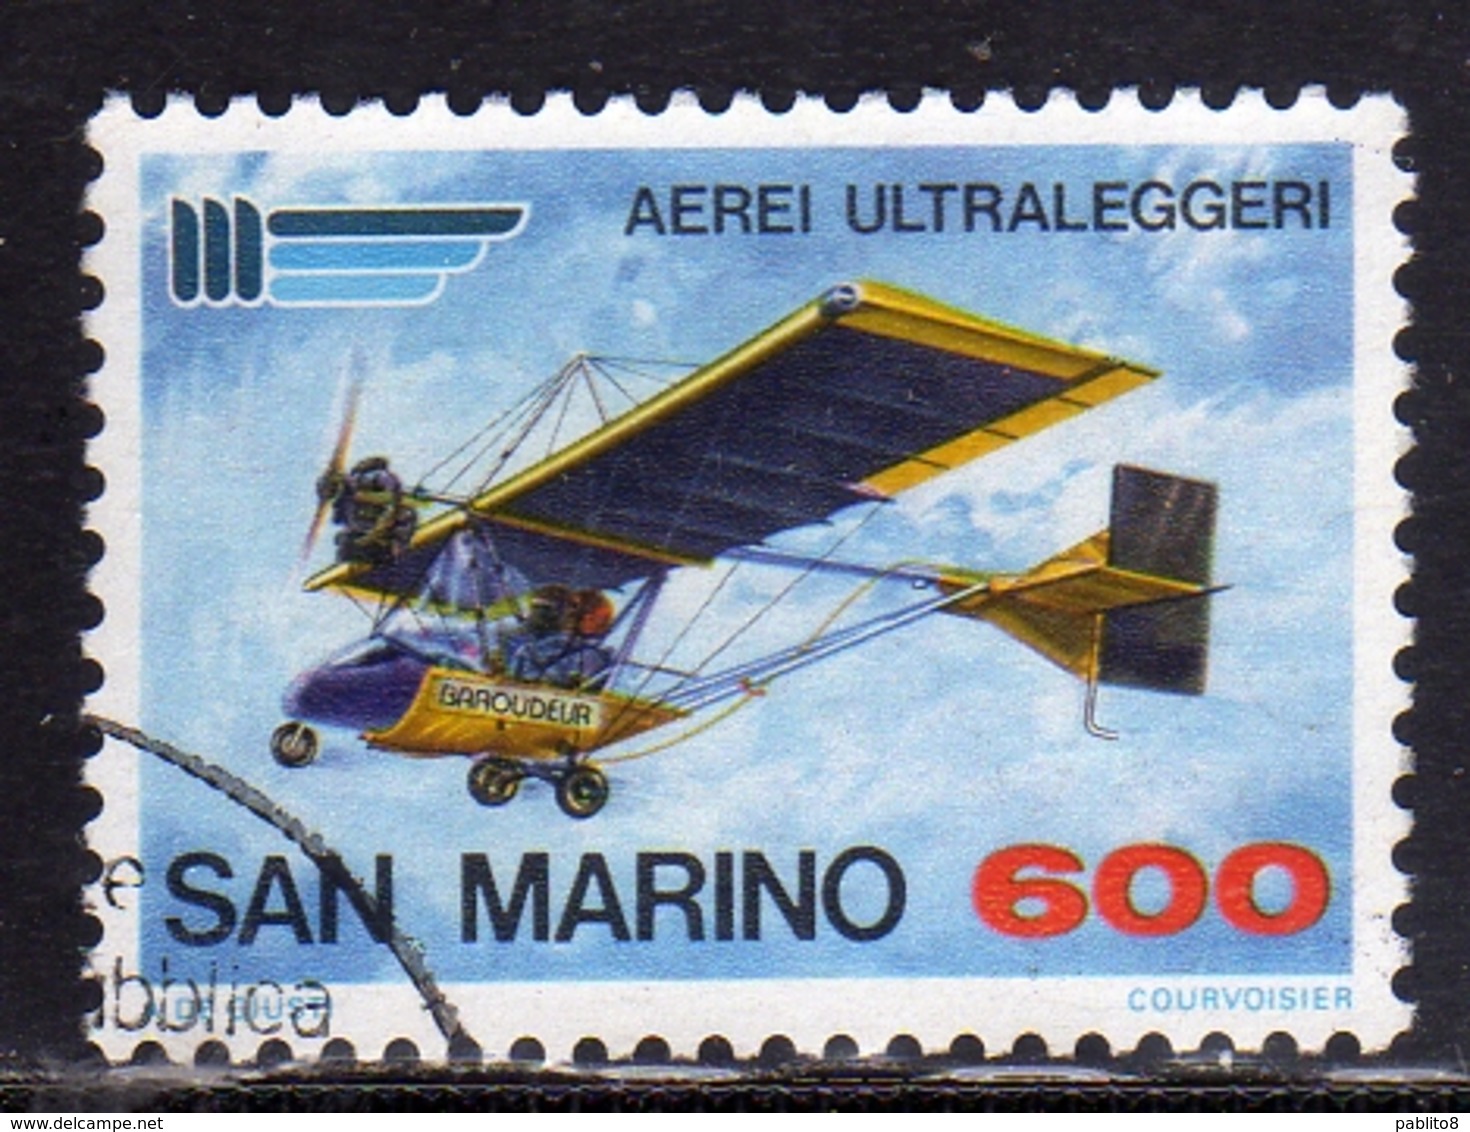 REPUBBLICA DI SAN MARINO 1987 AEREI ULTRALEGGERI ULTRA-LIGHT AIRCRAFT AÉRONEF ULTRA-LÉGER LIRE 600 USATO USED OBLITERE' - Gebruikt